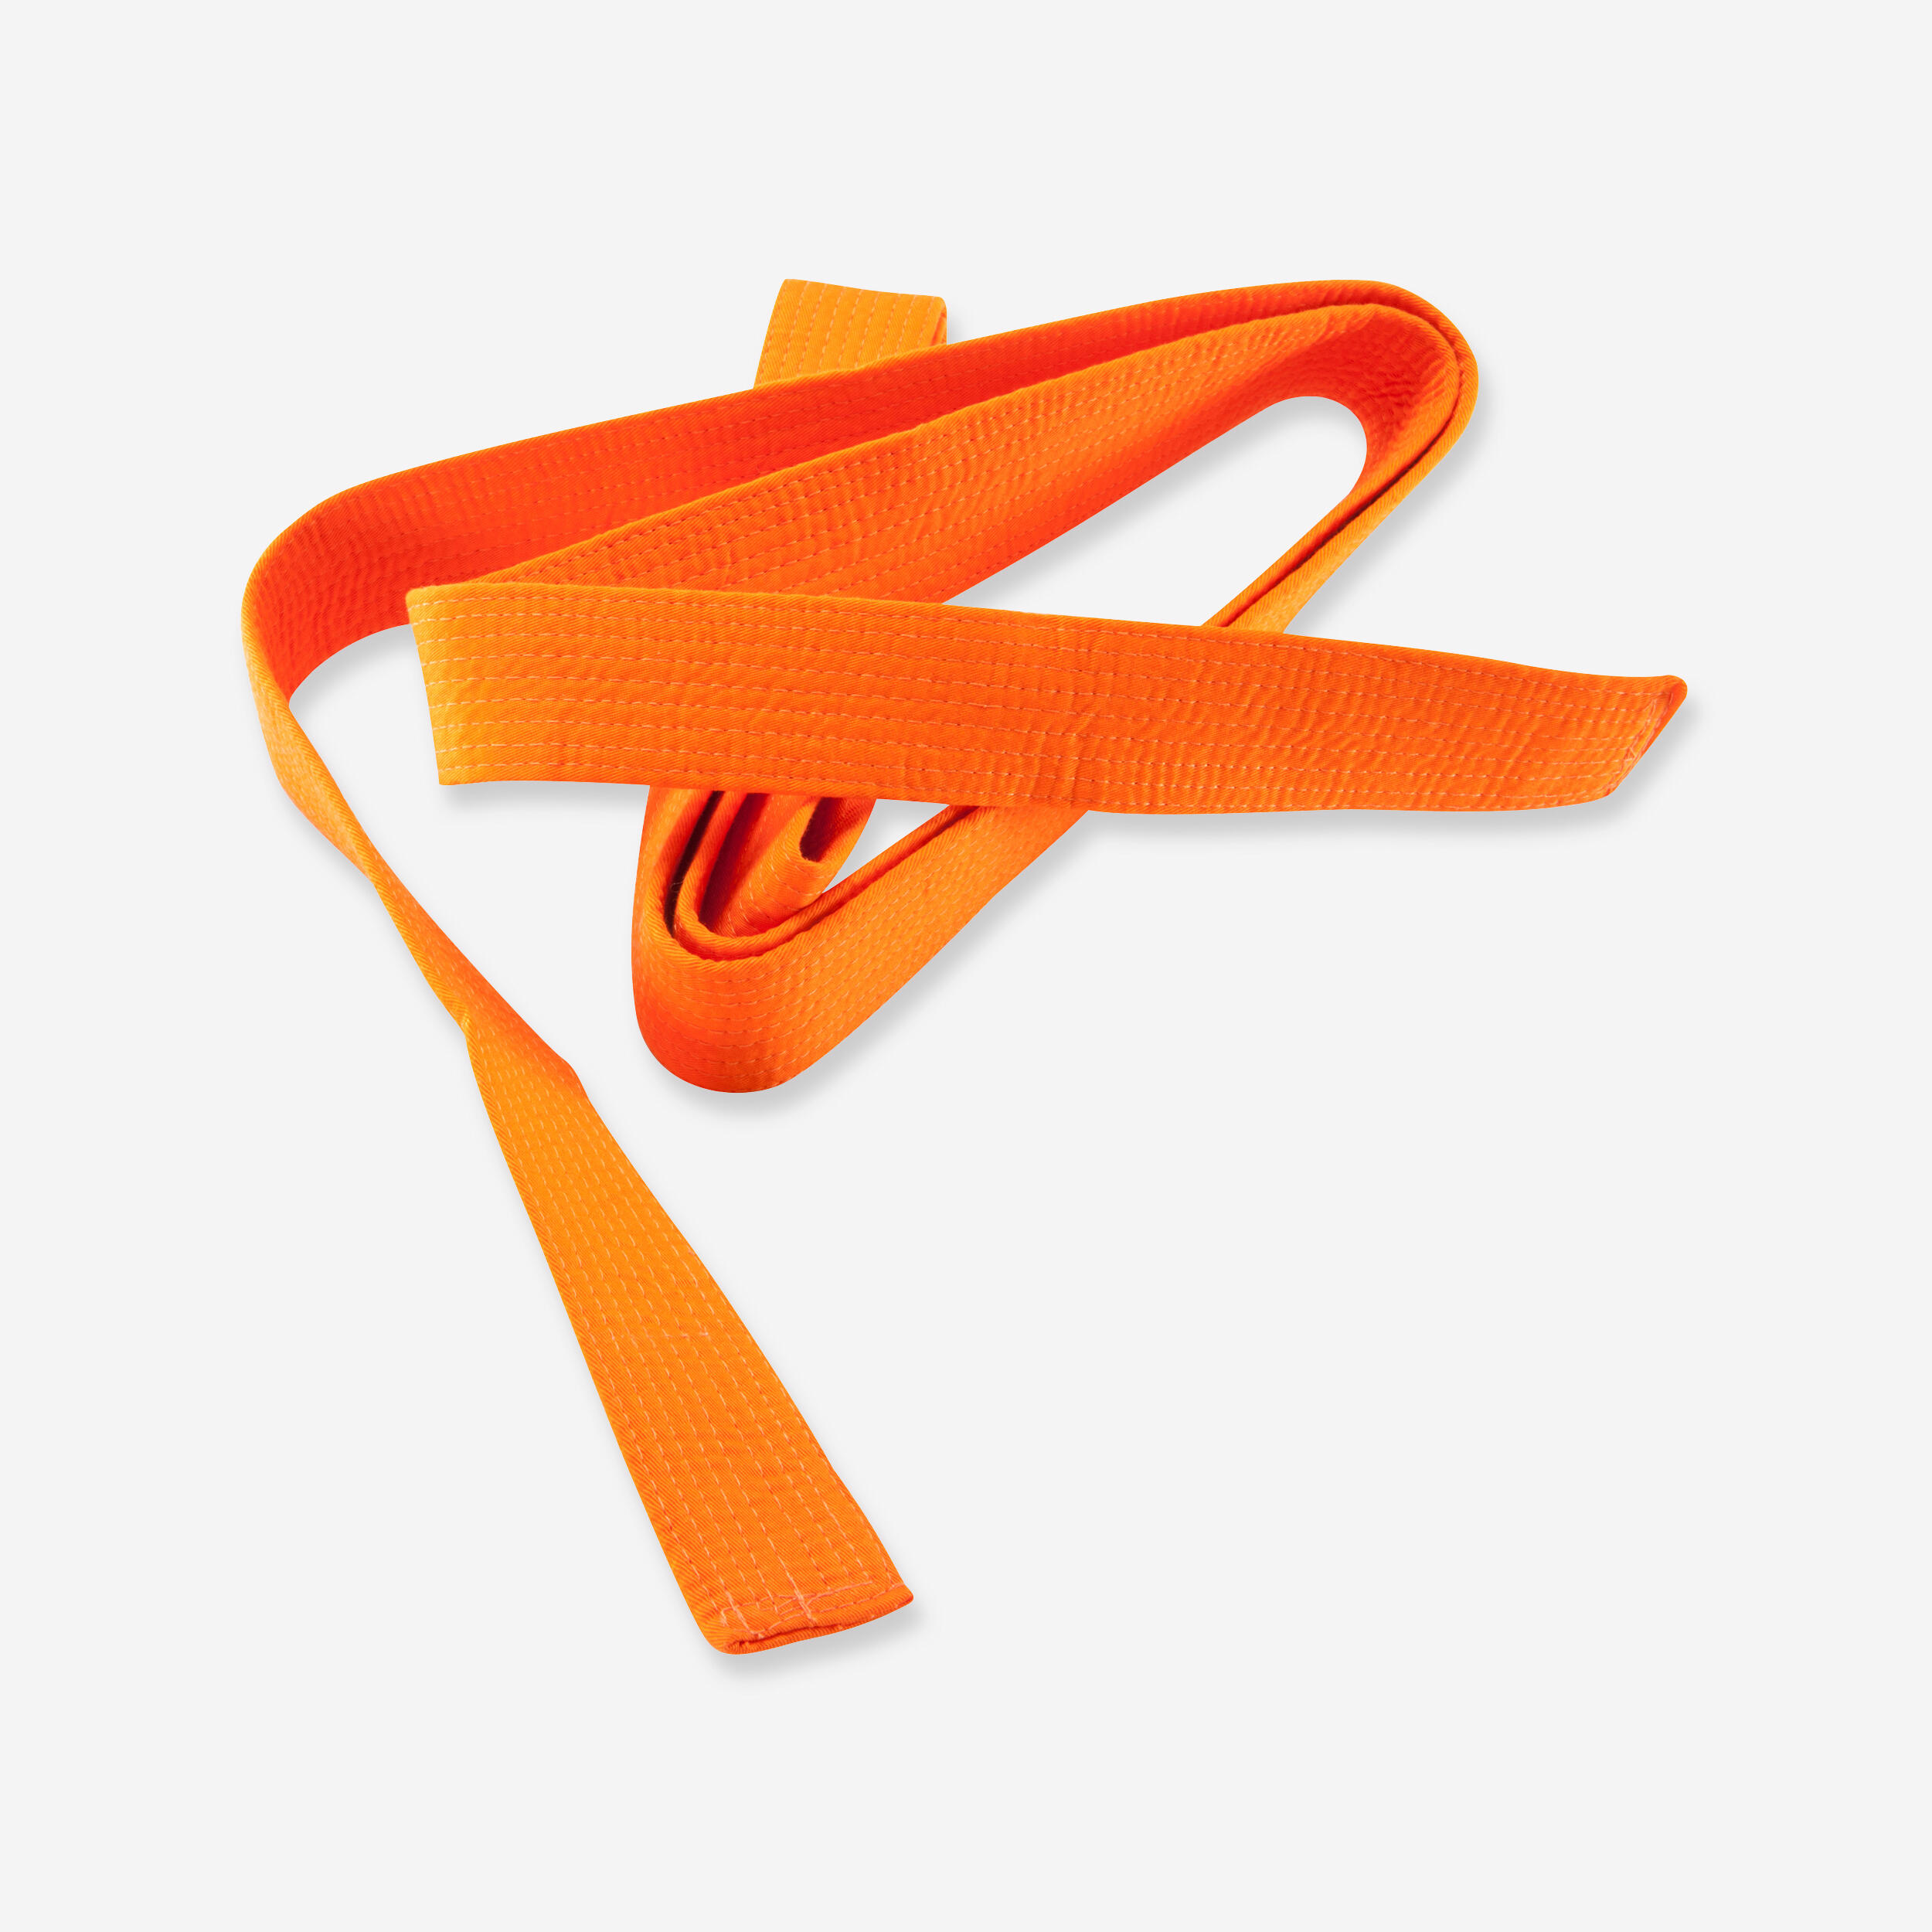 OUTSHOCK 2.5m Piqué Belt - Orange